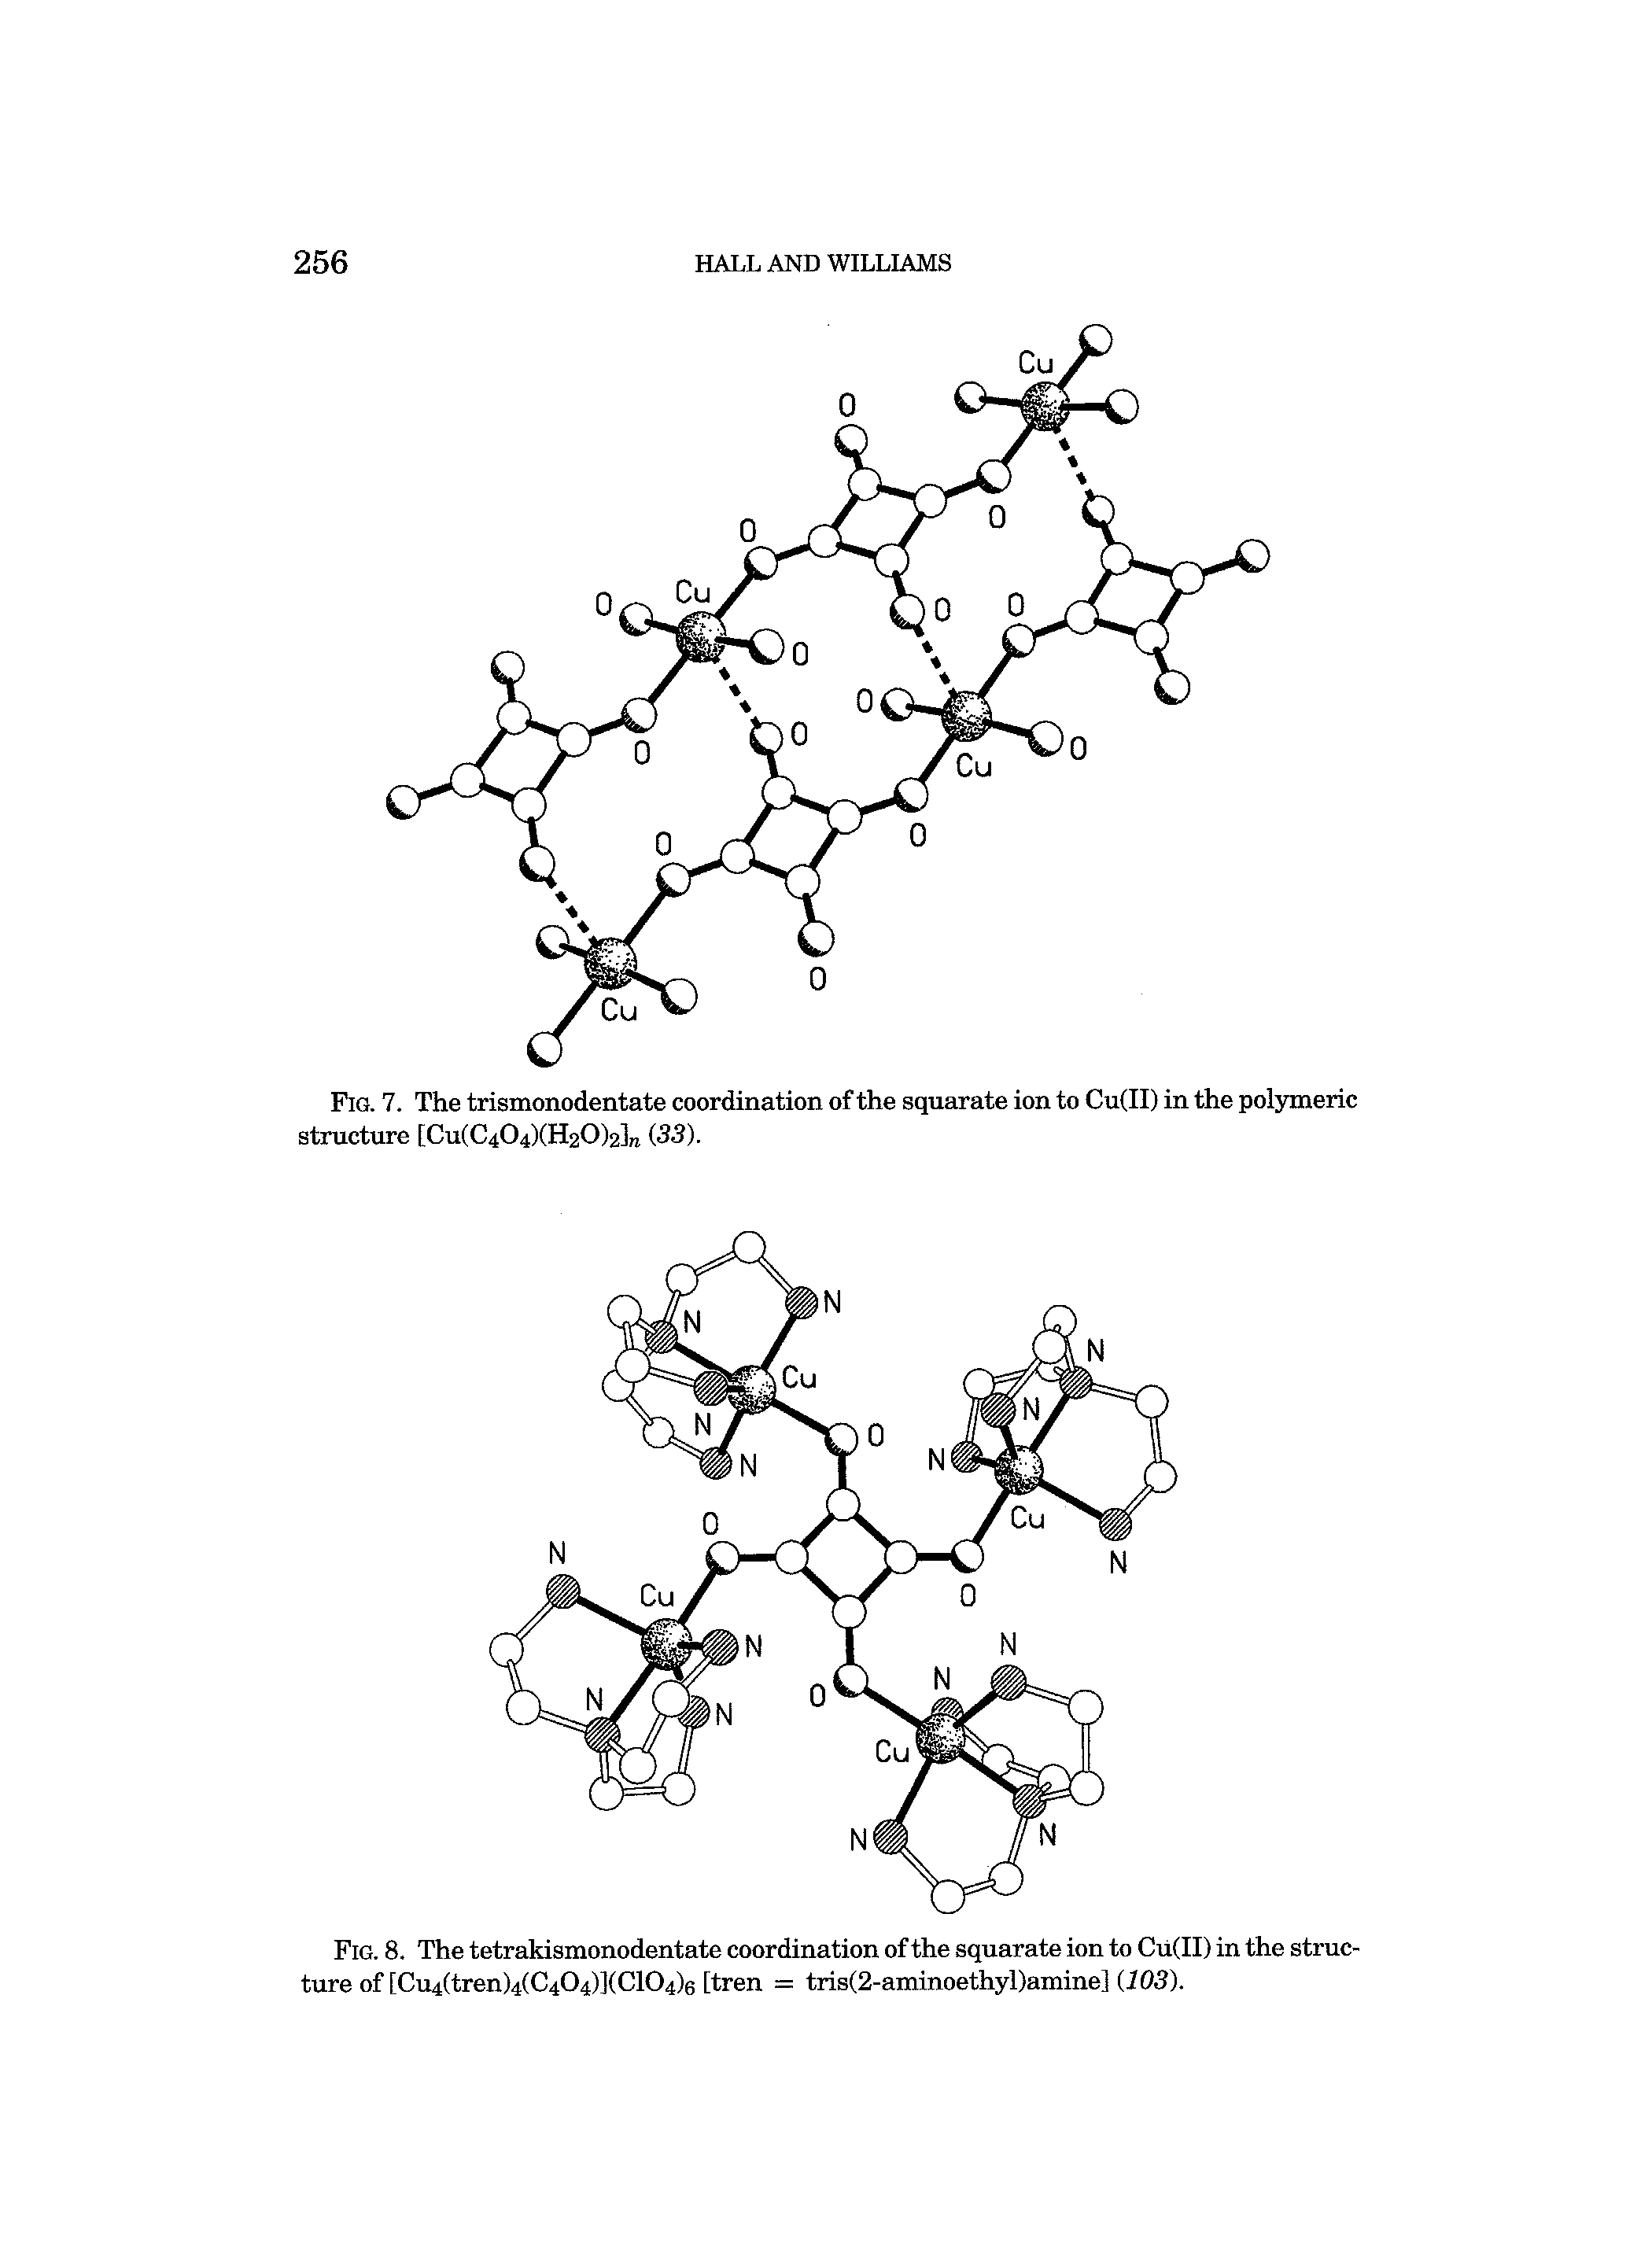 Fig. 8. The tetrakismonodentate coordination of the squarate ion to Cu(II) in the structure of [Cu4(tren)4(C404)](C104)6 [tren = tris(2-aminoethyl)amine] (103).